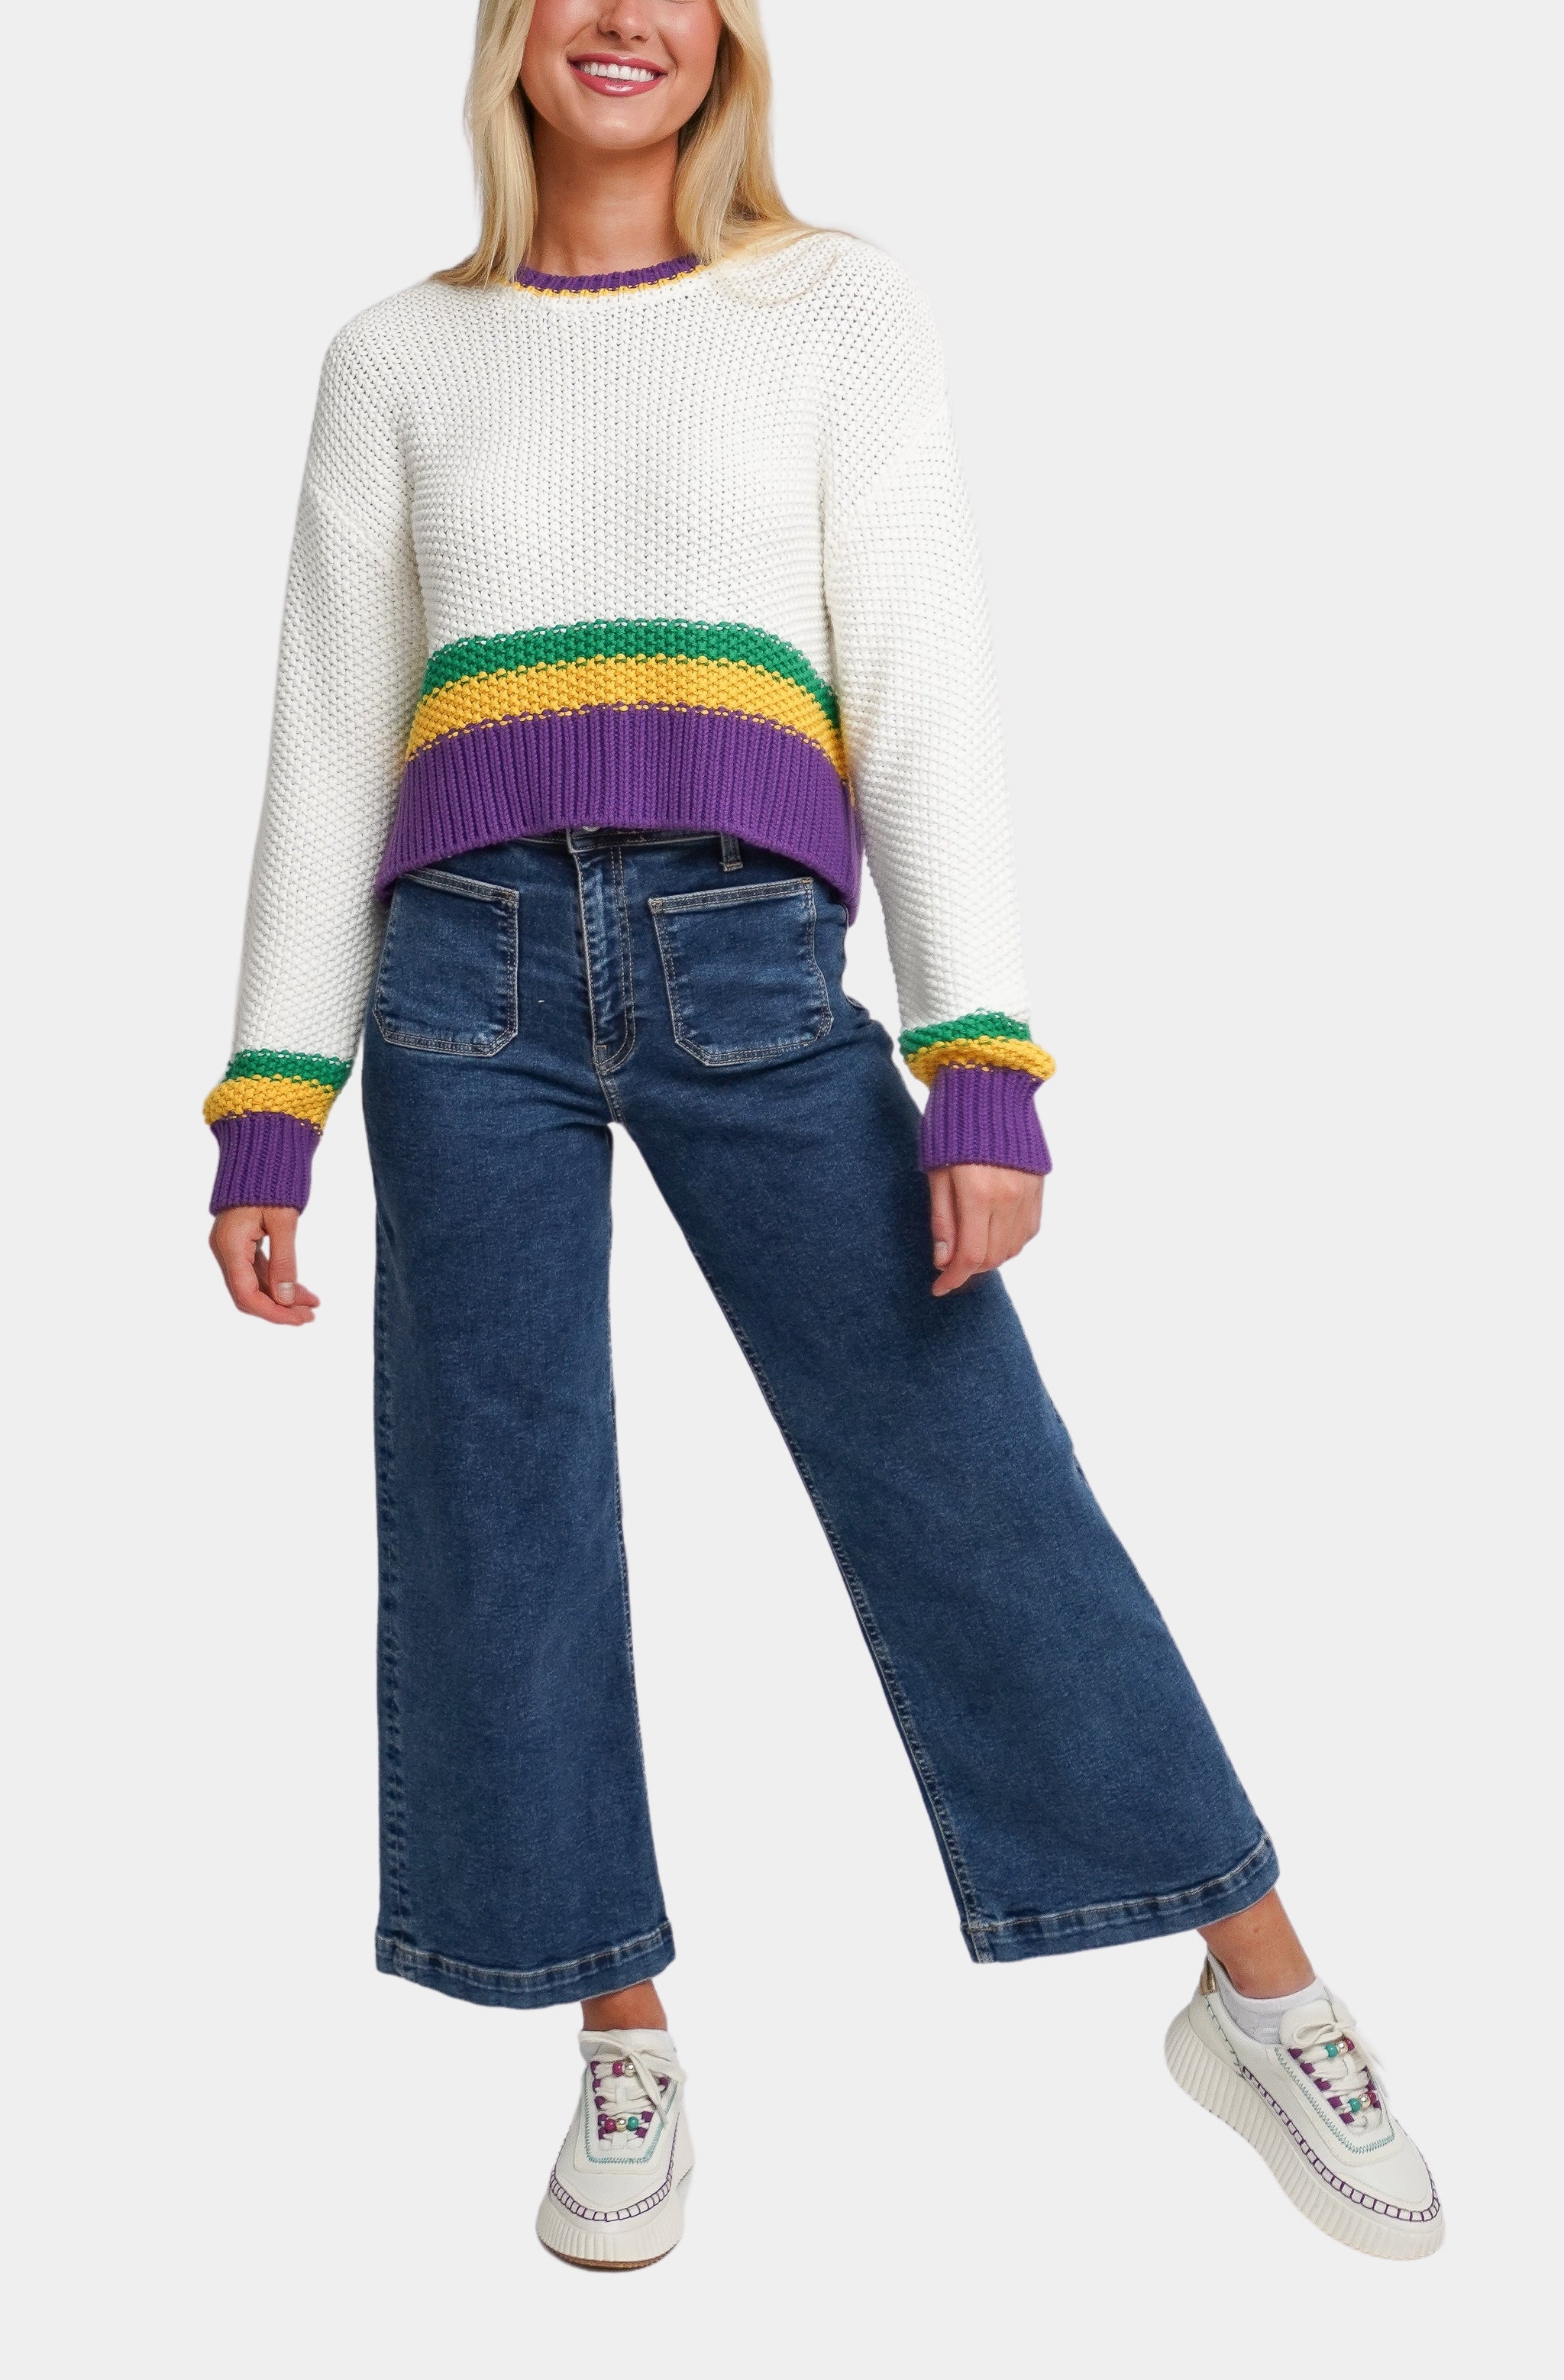 Hemline Exclusive Only One Mardi Gras Sweater